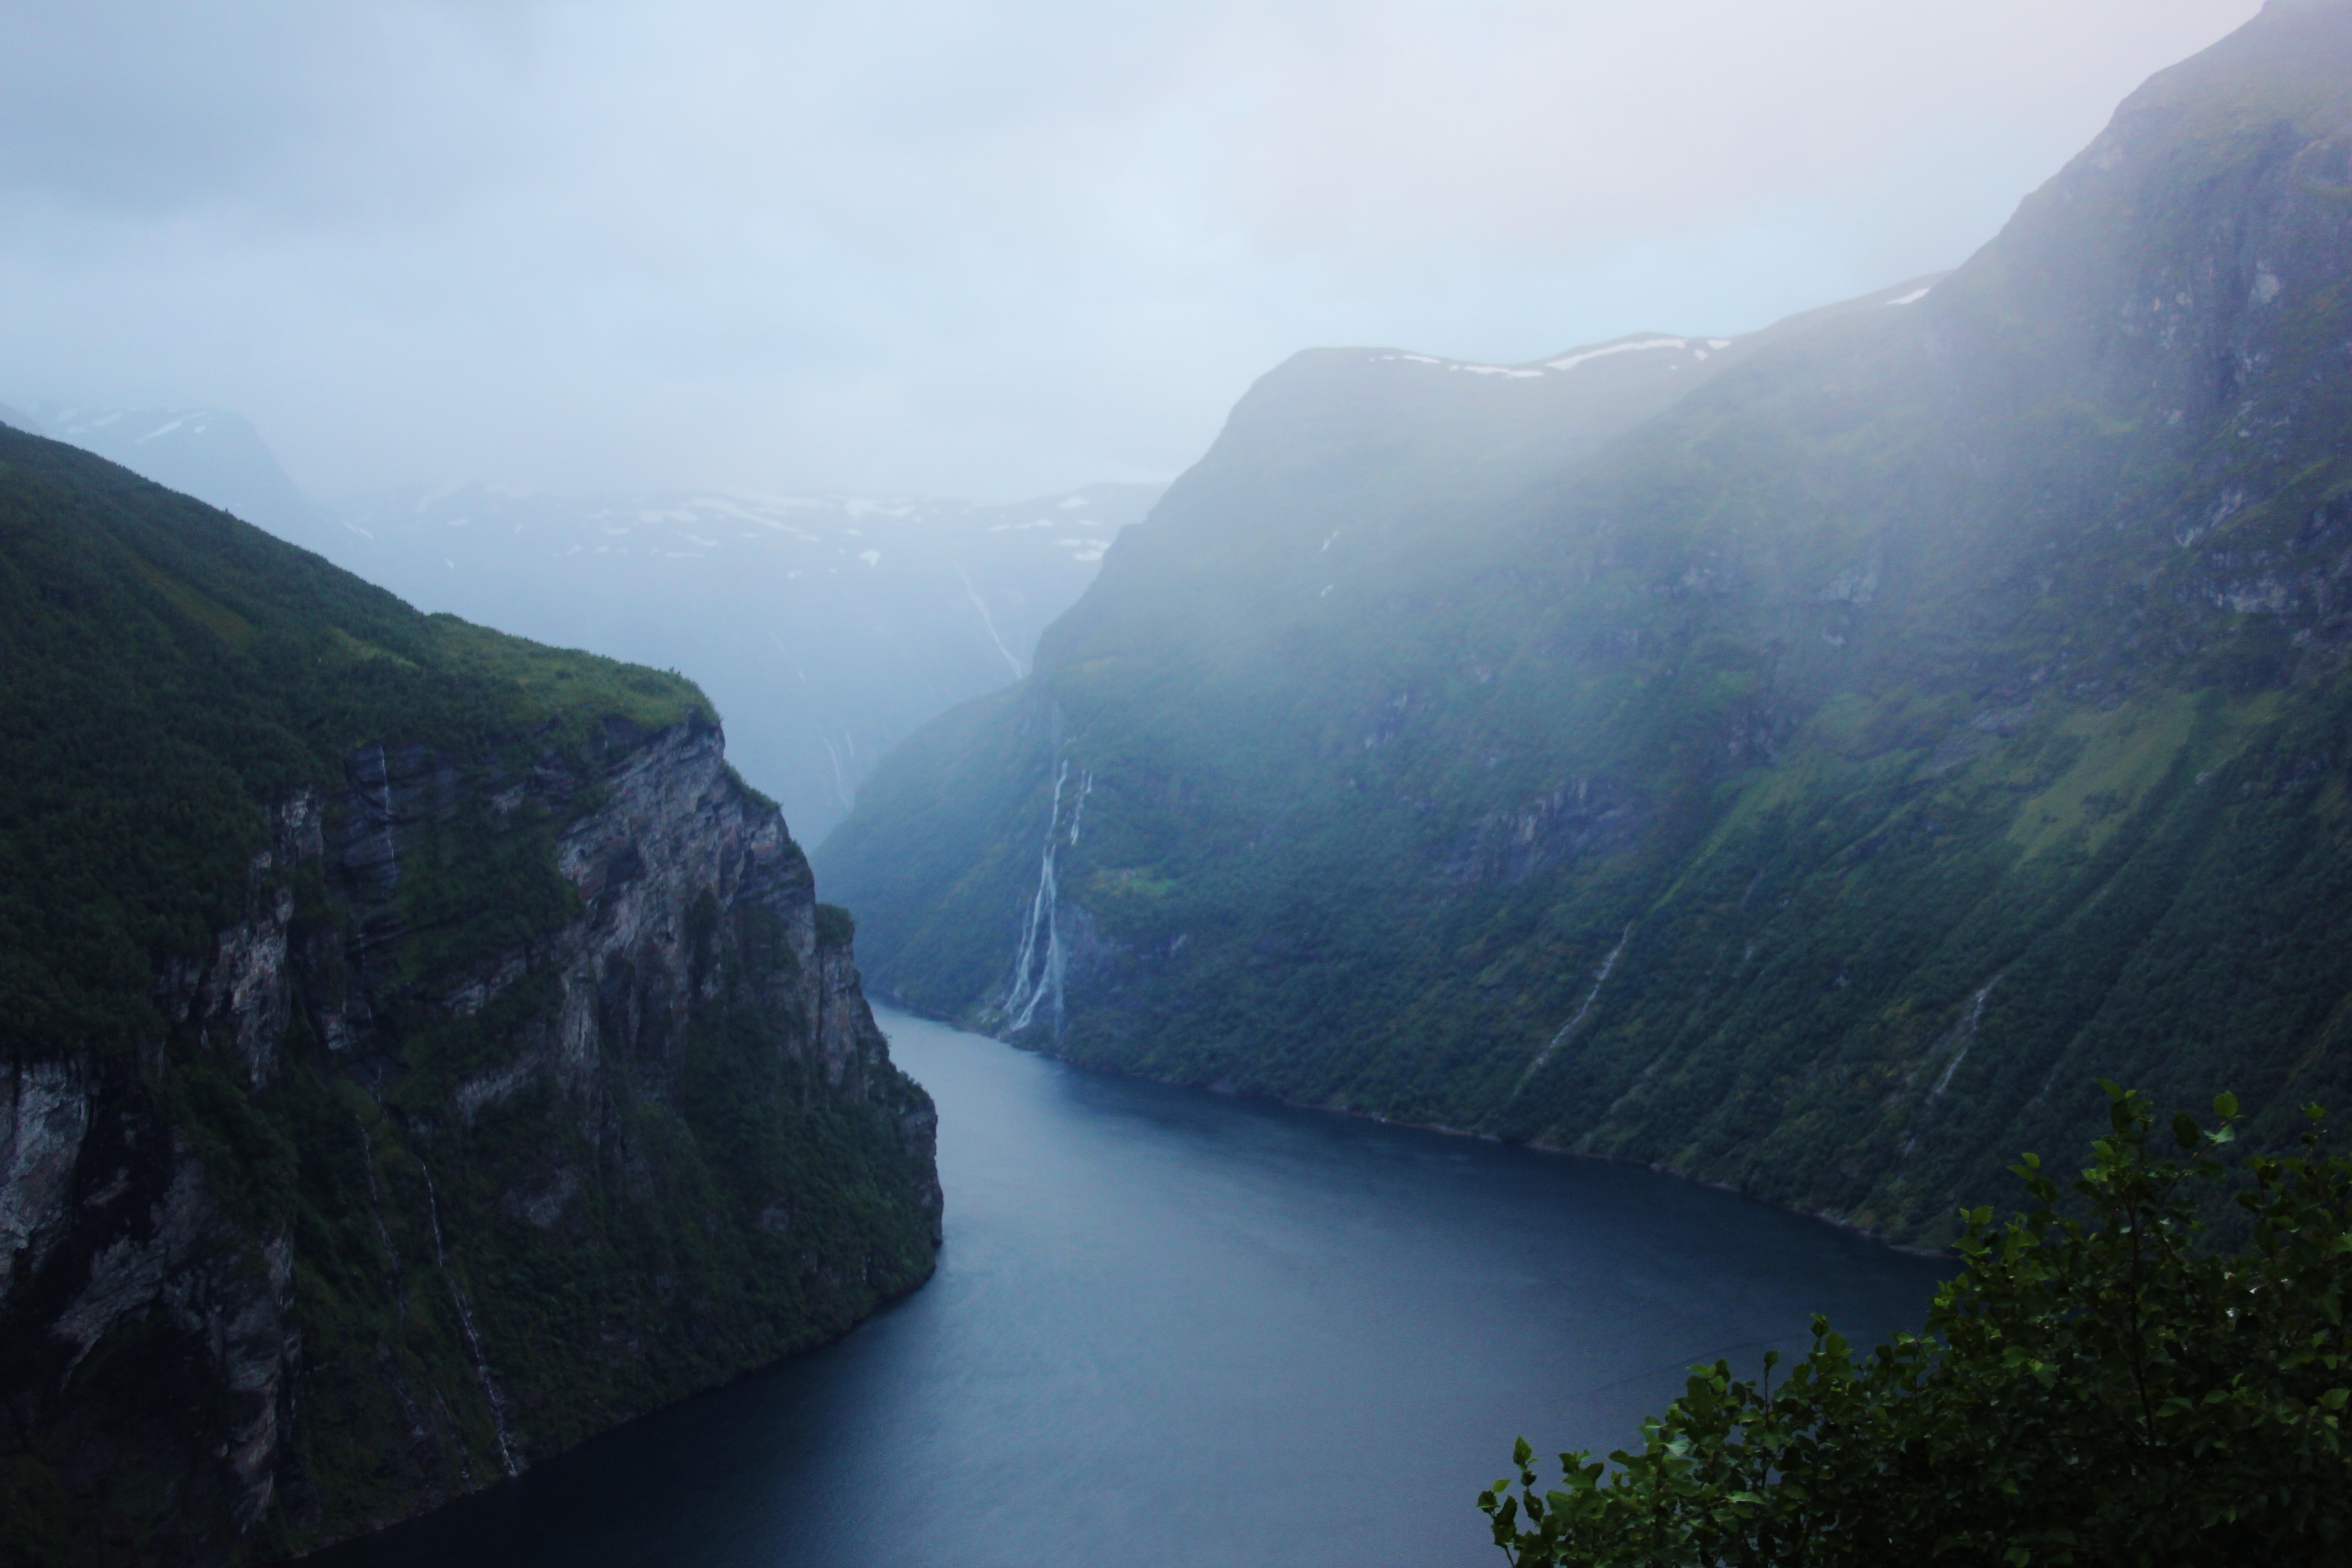 The Geirangerfjord